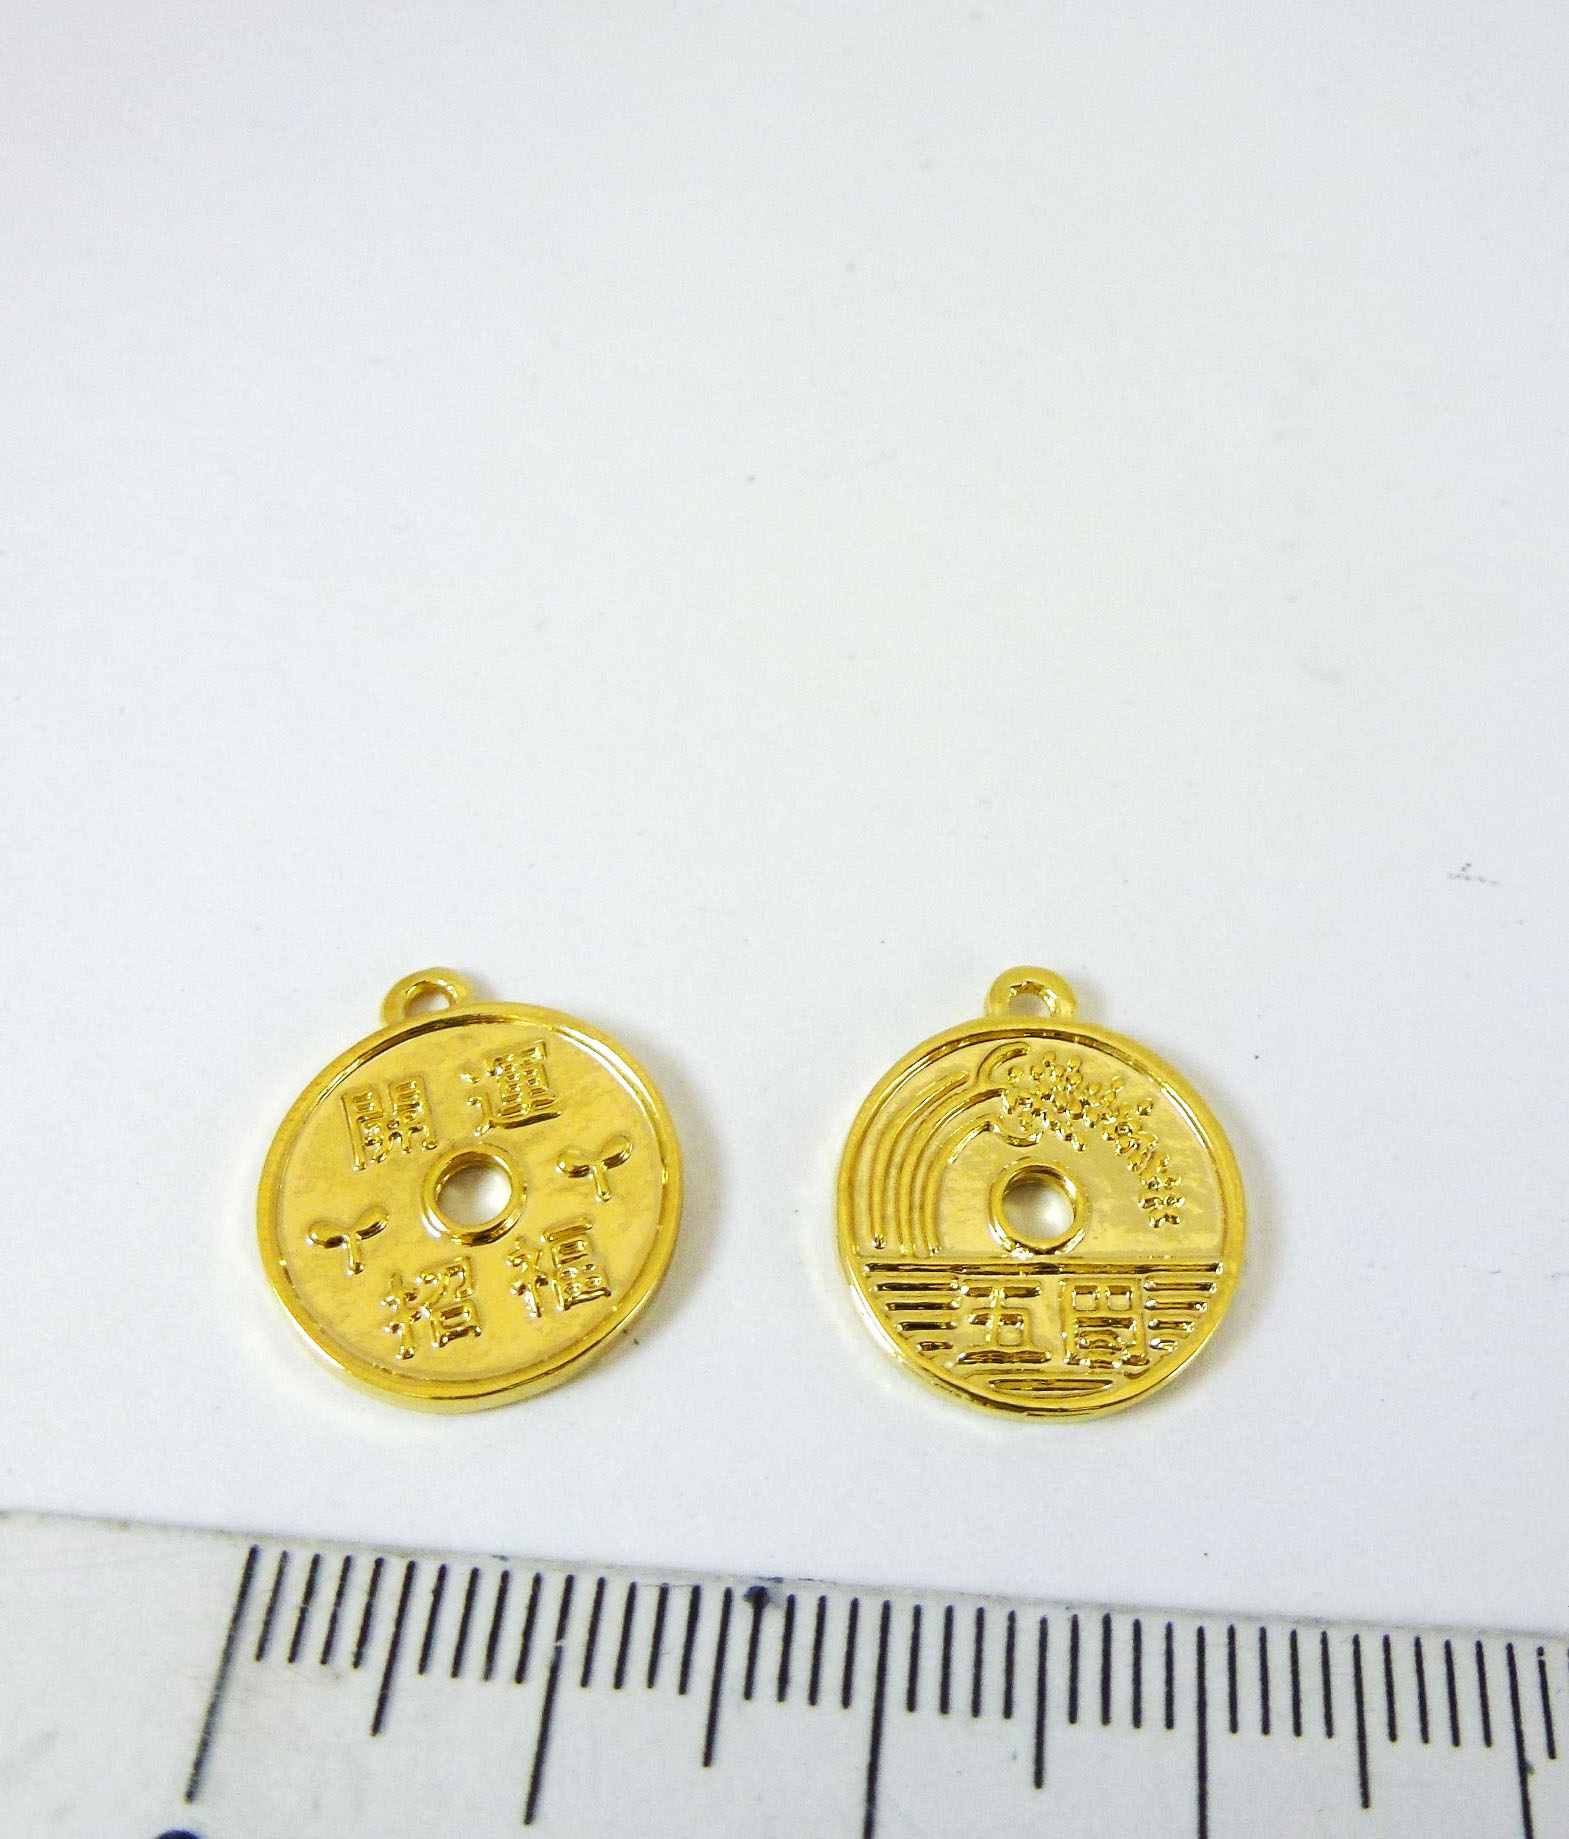 15mm銅鍍金色圓形招福錢幣